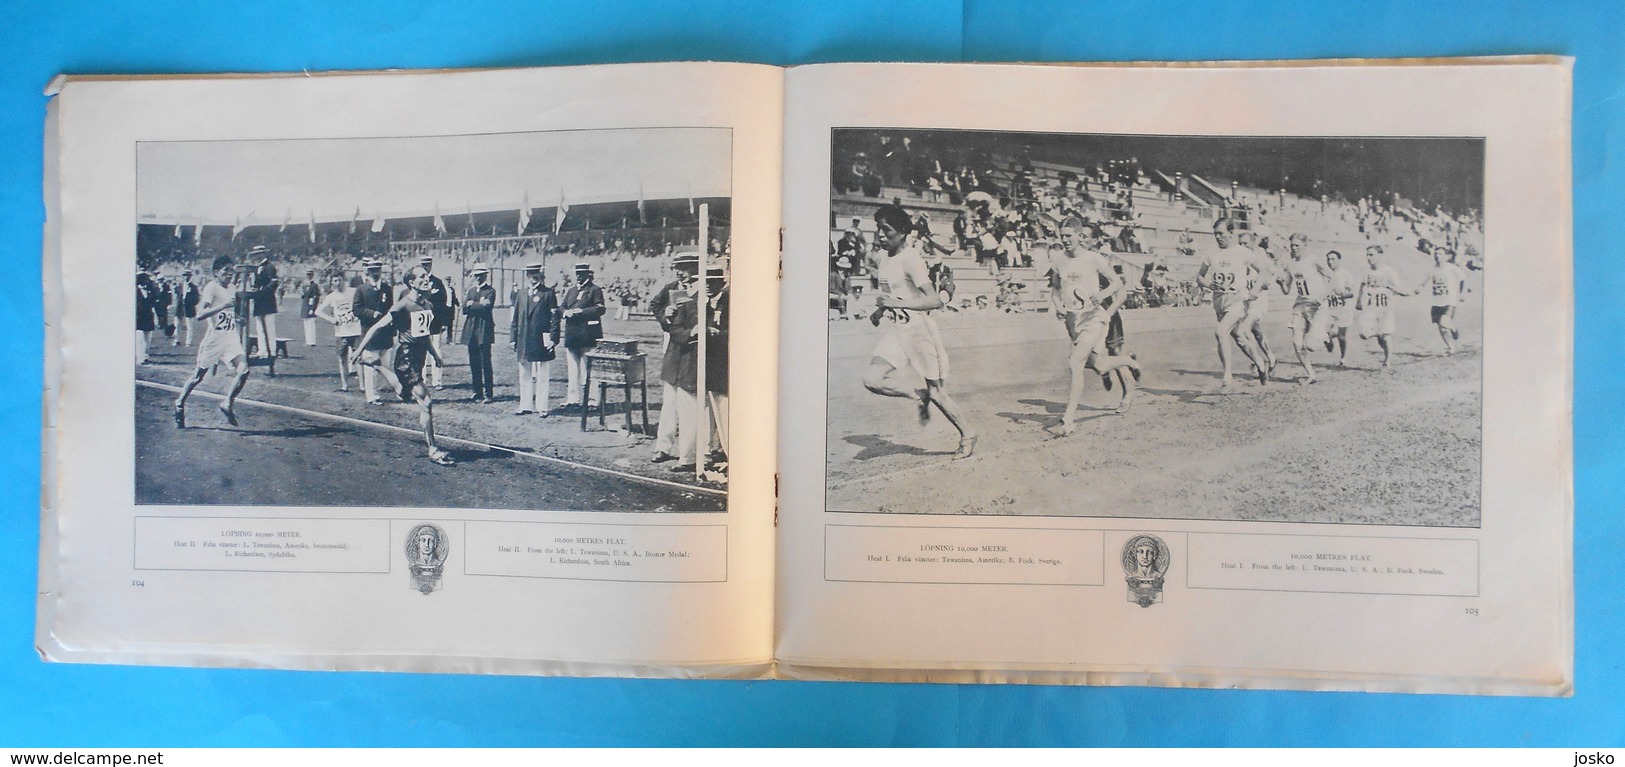 ATHLETICS on OLYMPIC GAMES 1912 STOCKHOLM - original vintage programme * athletisme atletismo atletica athletik athletic